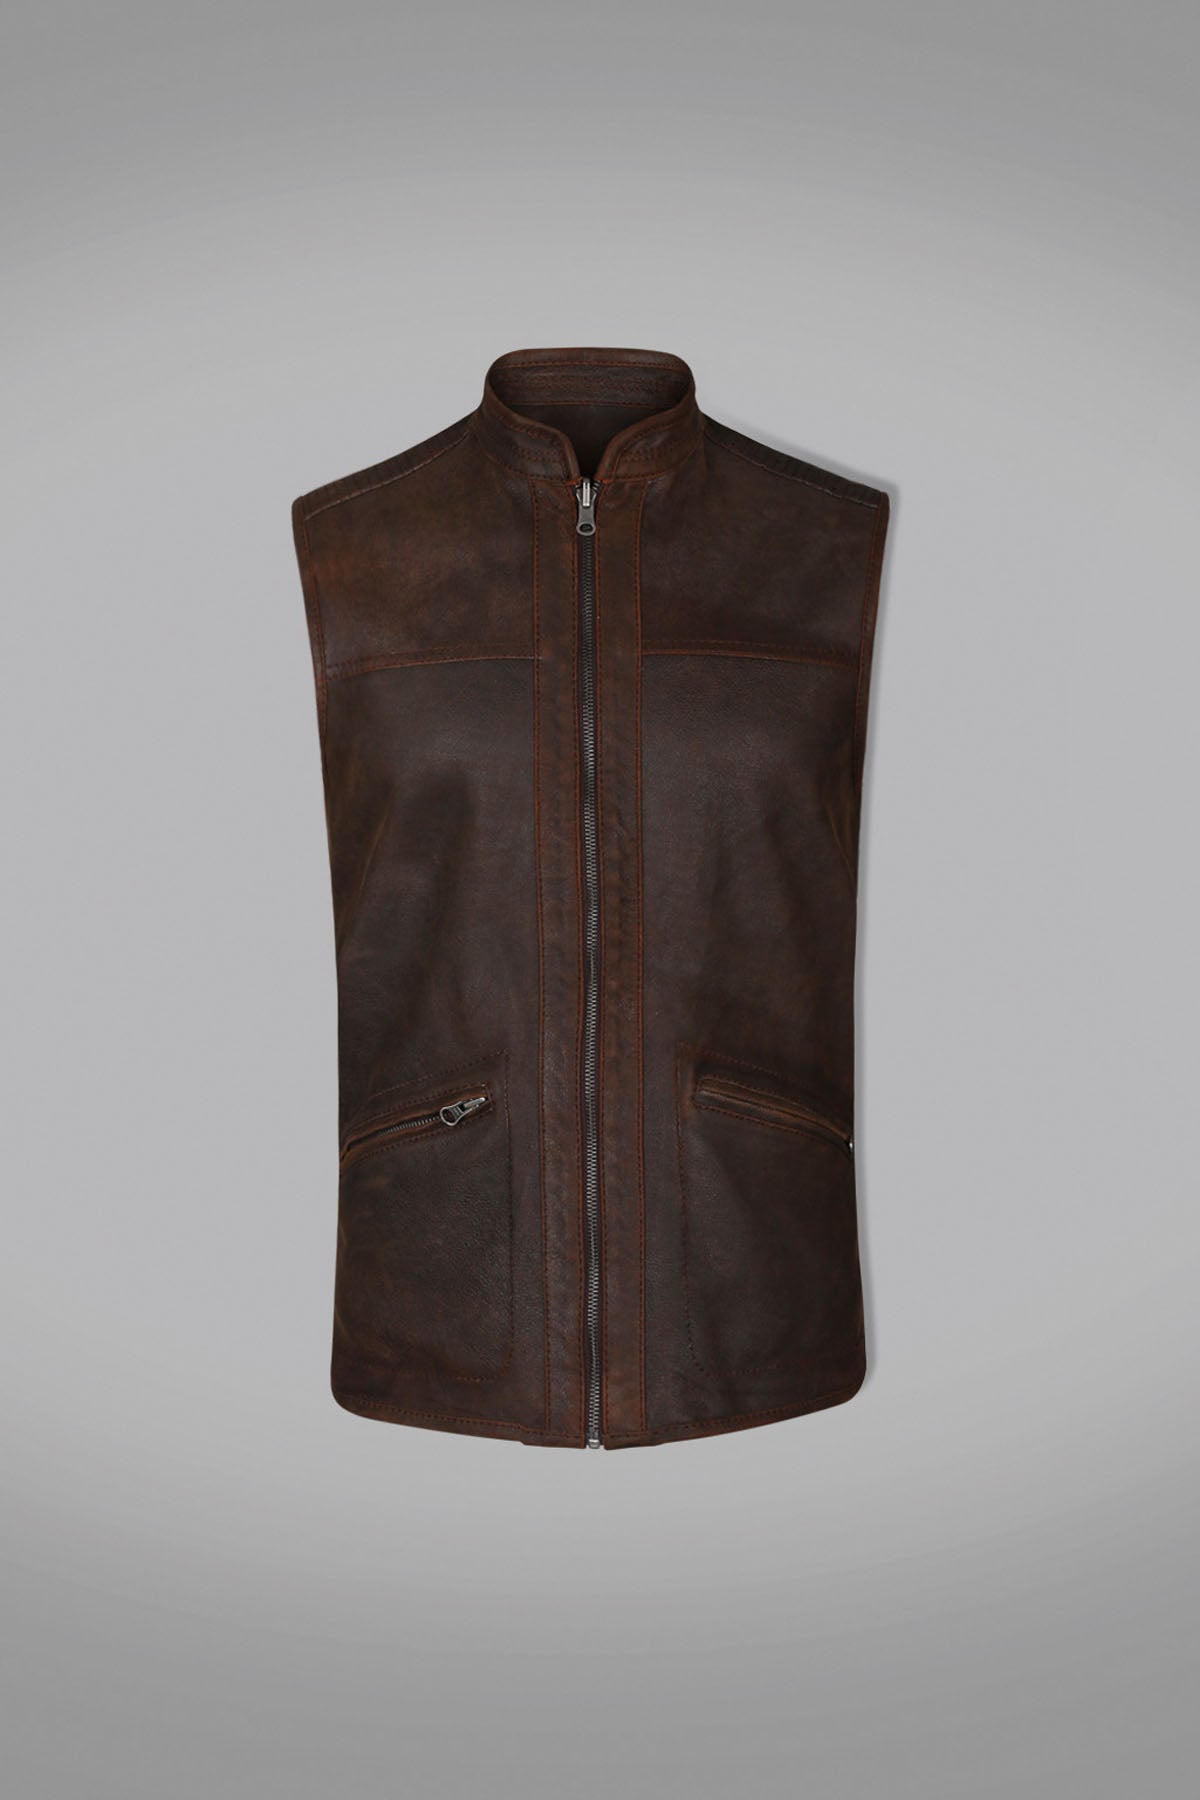 Revrsible Leather Waist Coat